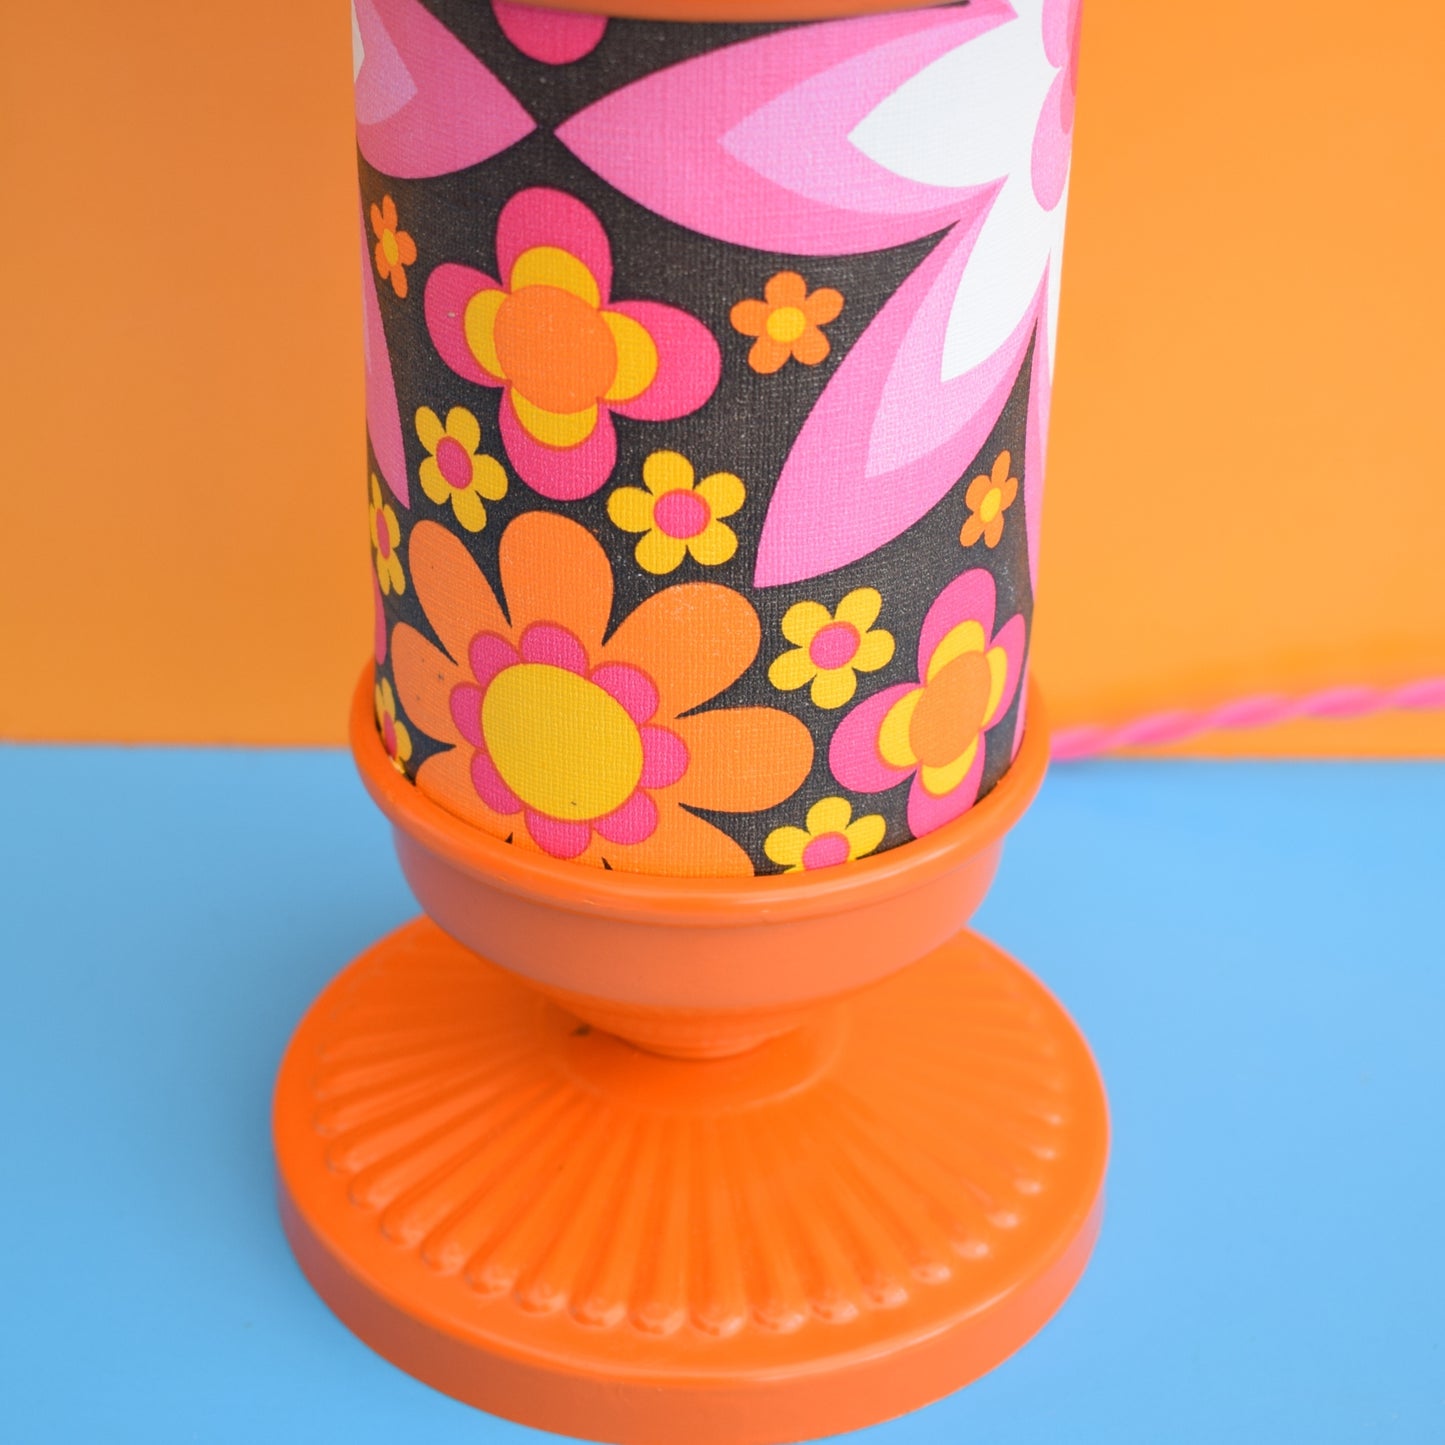 Vintage 1960s Lamp - Flower Power Orange/ Pink